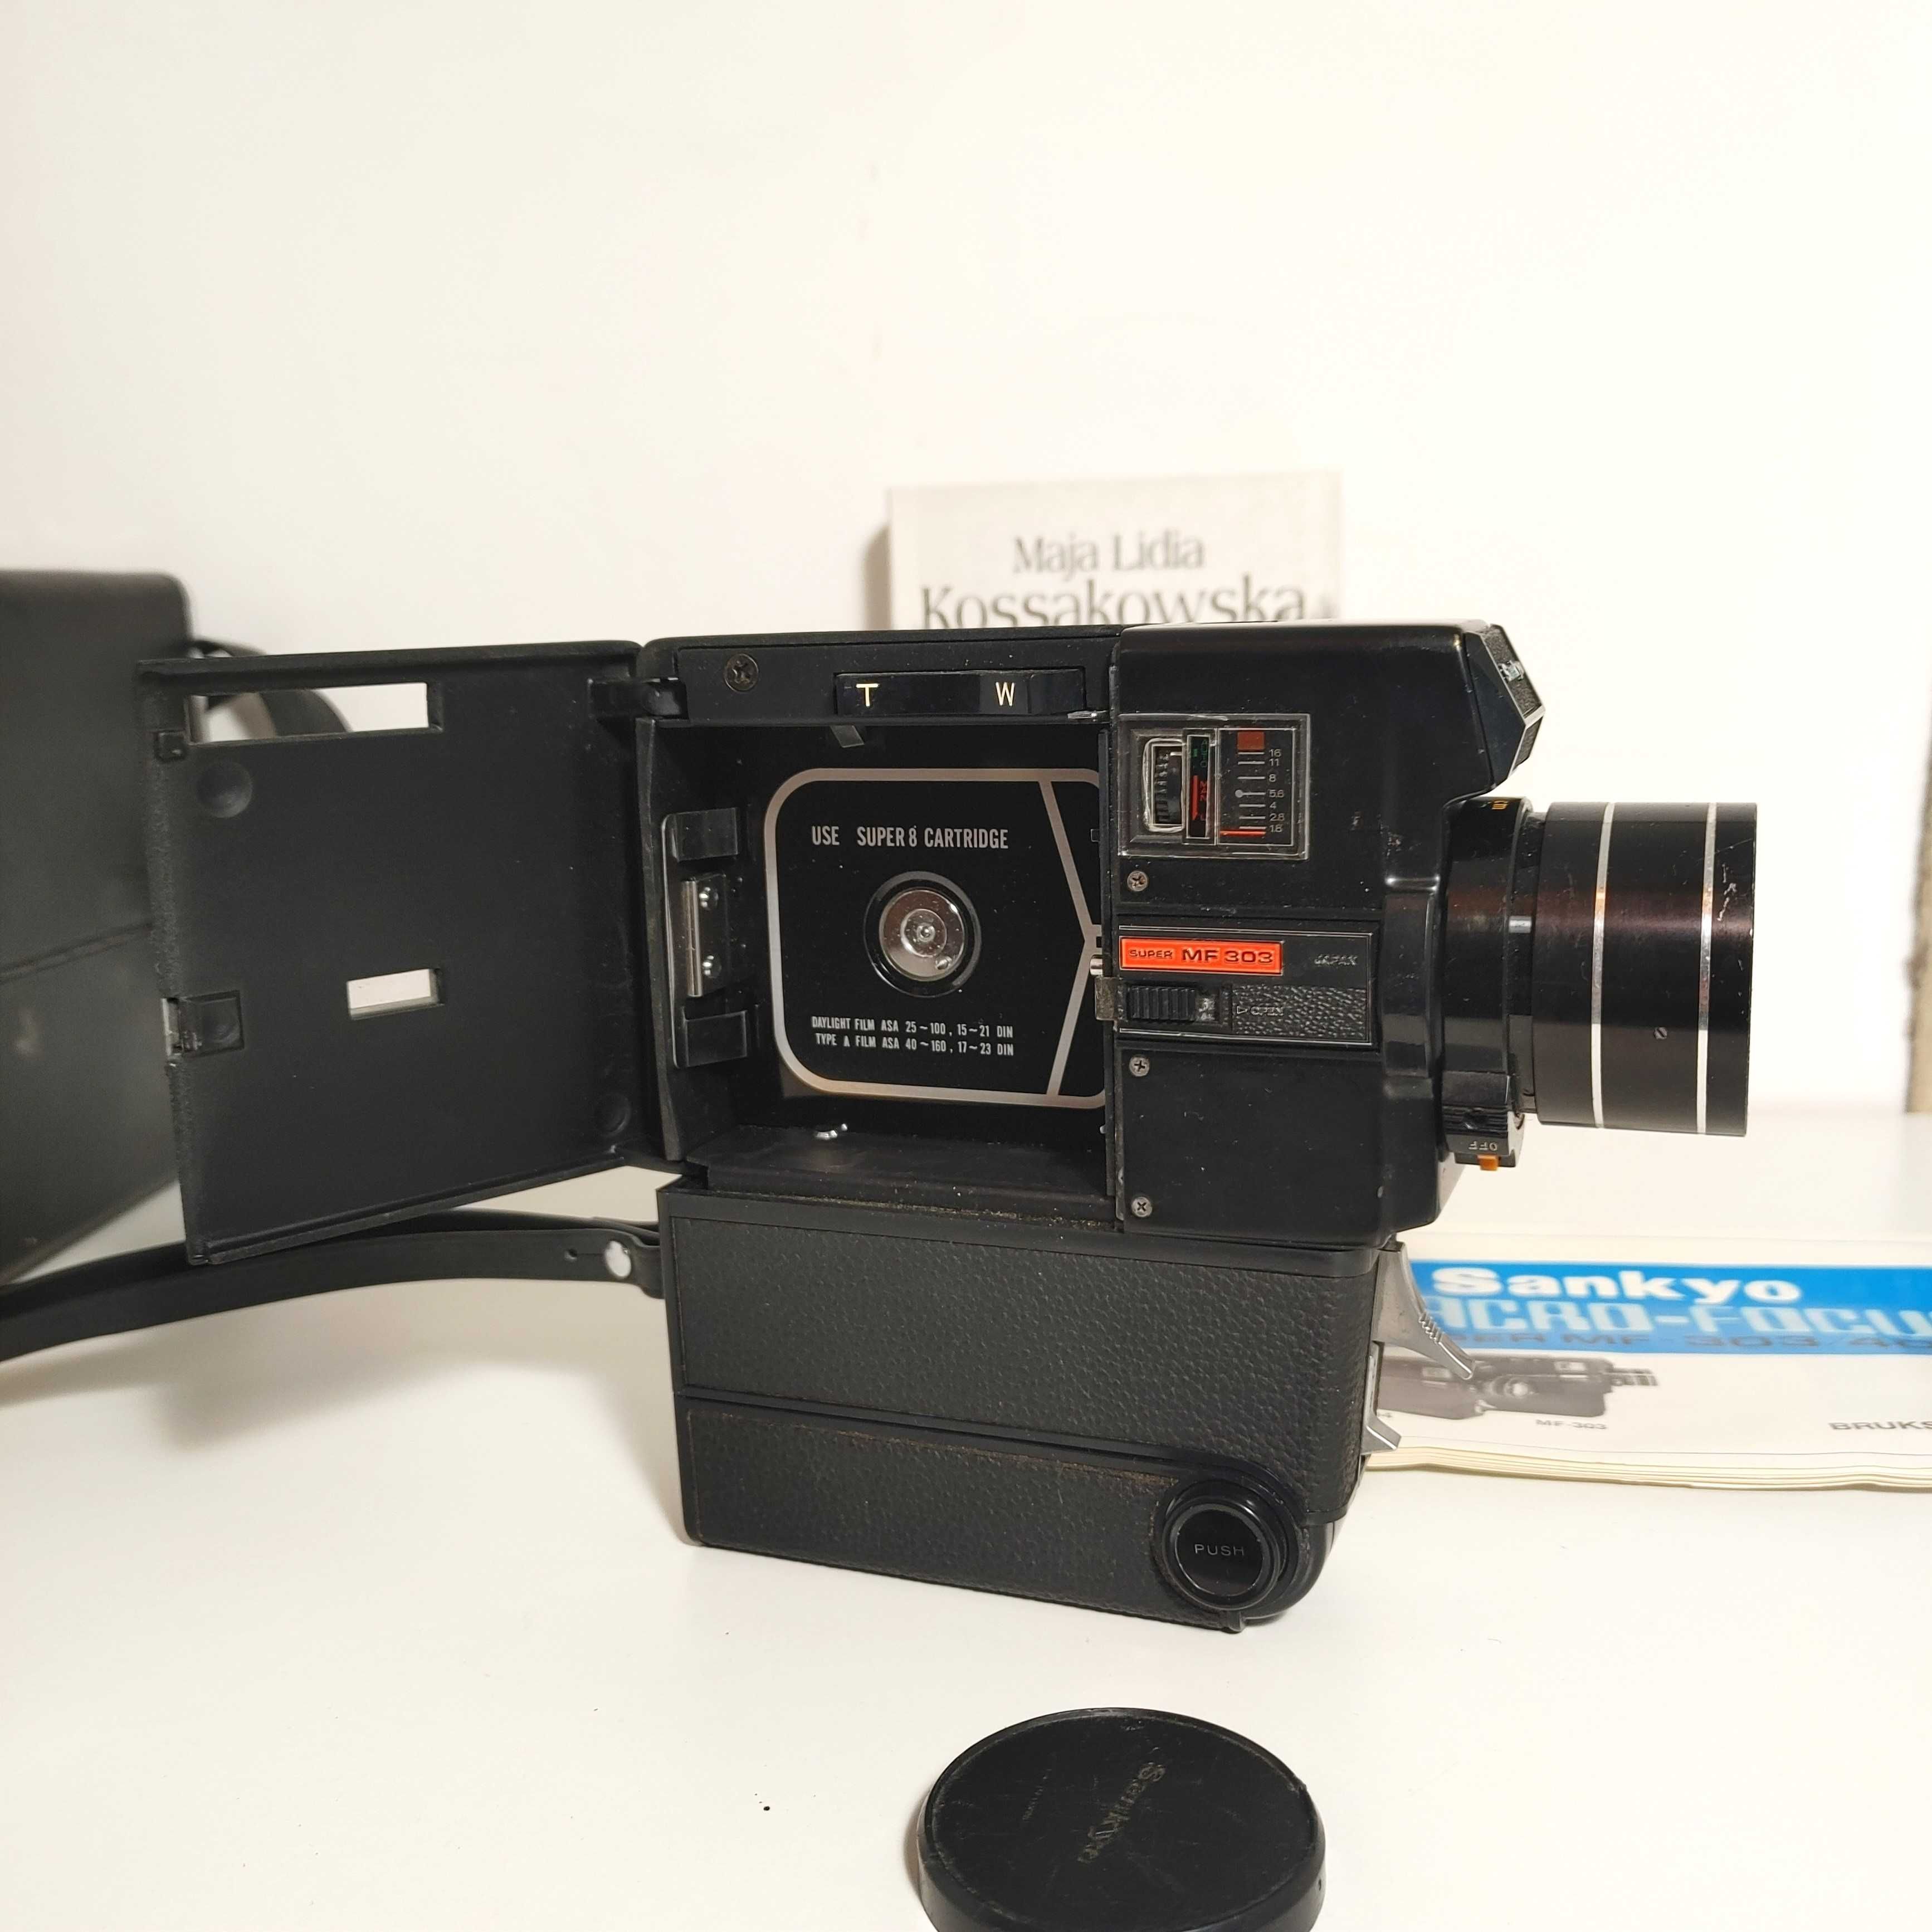 Kamera filmowa Sankyo Macro-Fokus  Super MF 303 na film Super 8mm